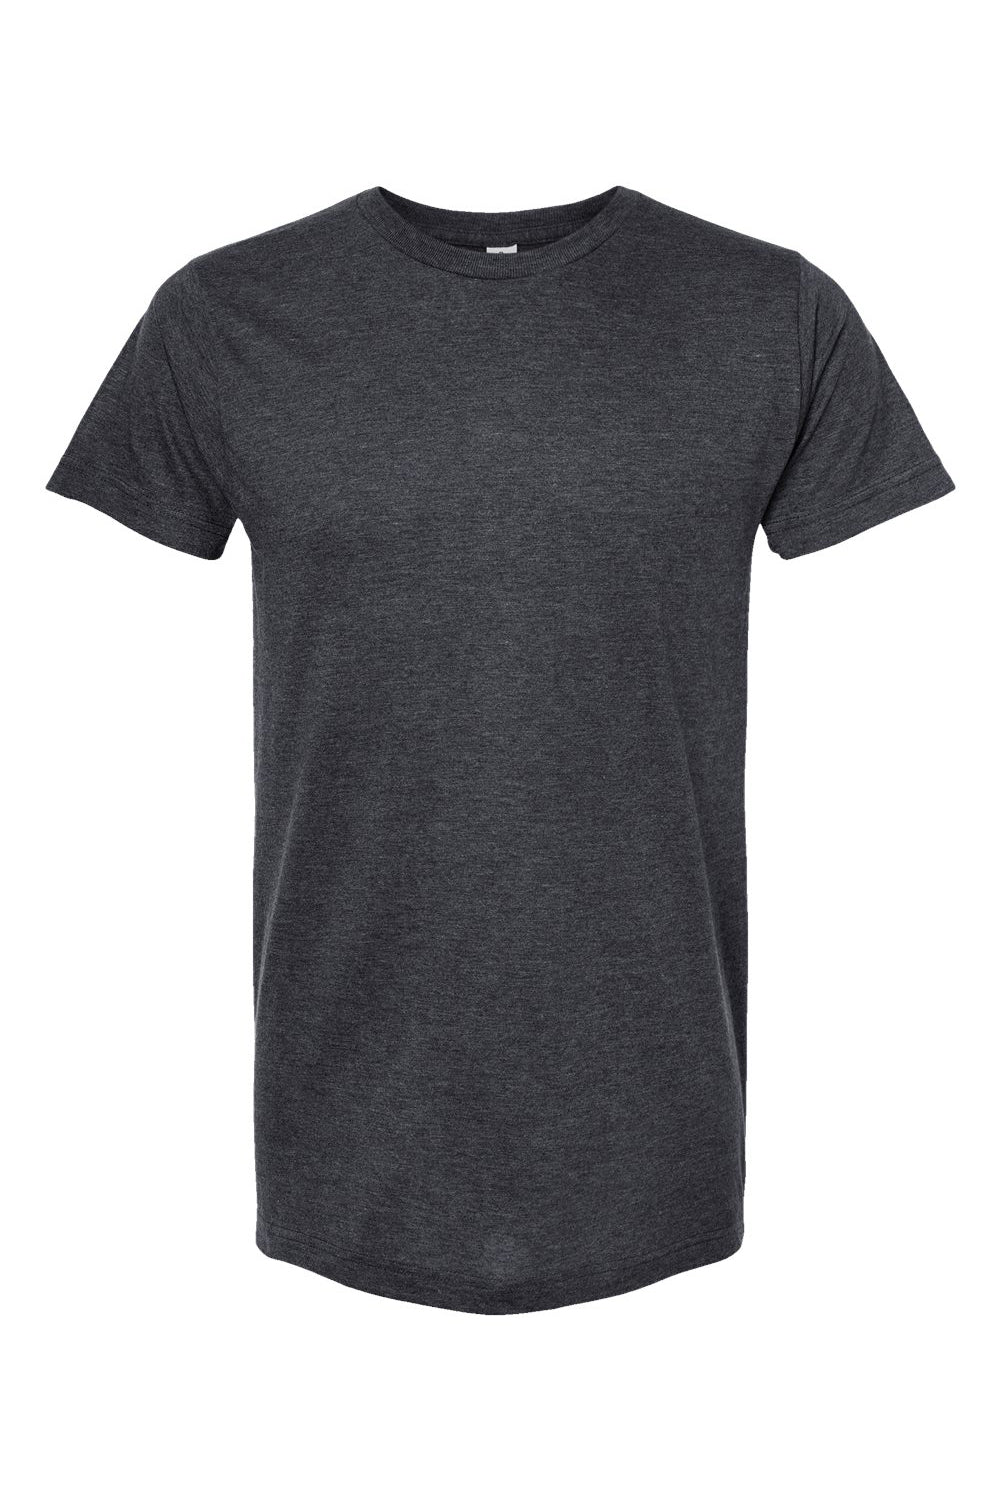 Tultex 202 Mens Fine Jersey Short Sleeve Crewneck T-Shirt Heather Graphite Grey Flat Front